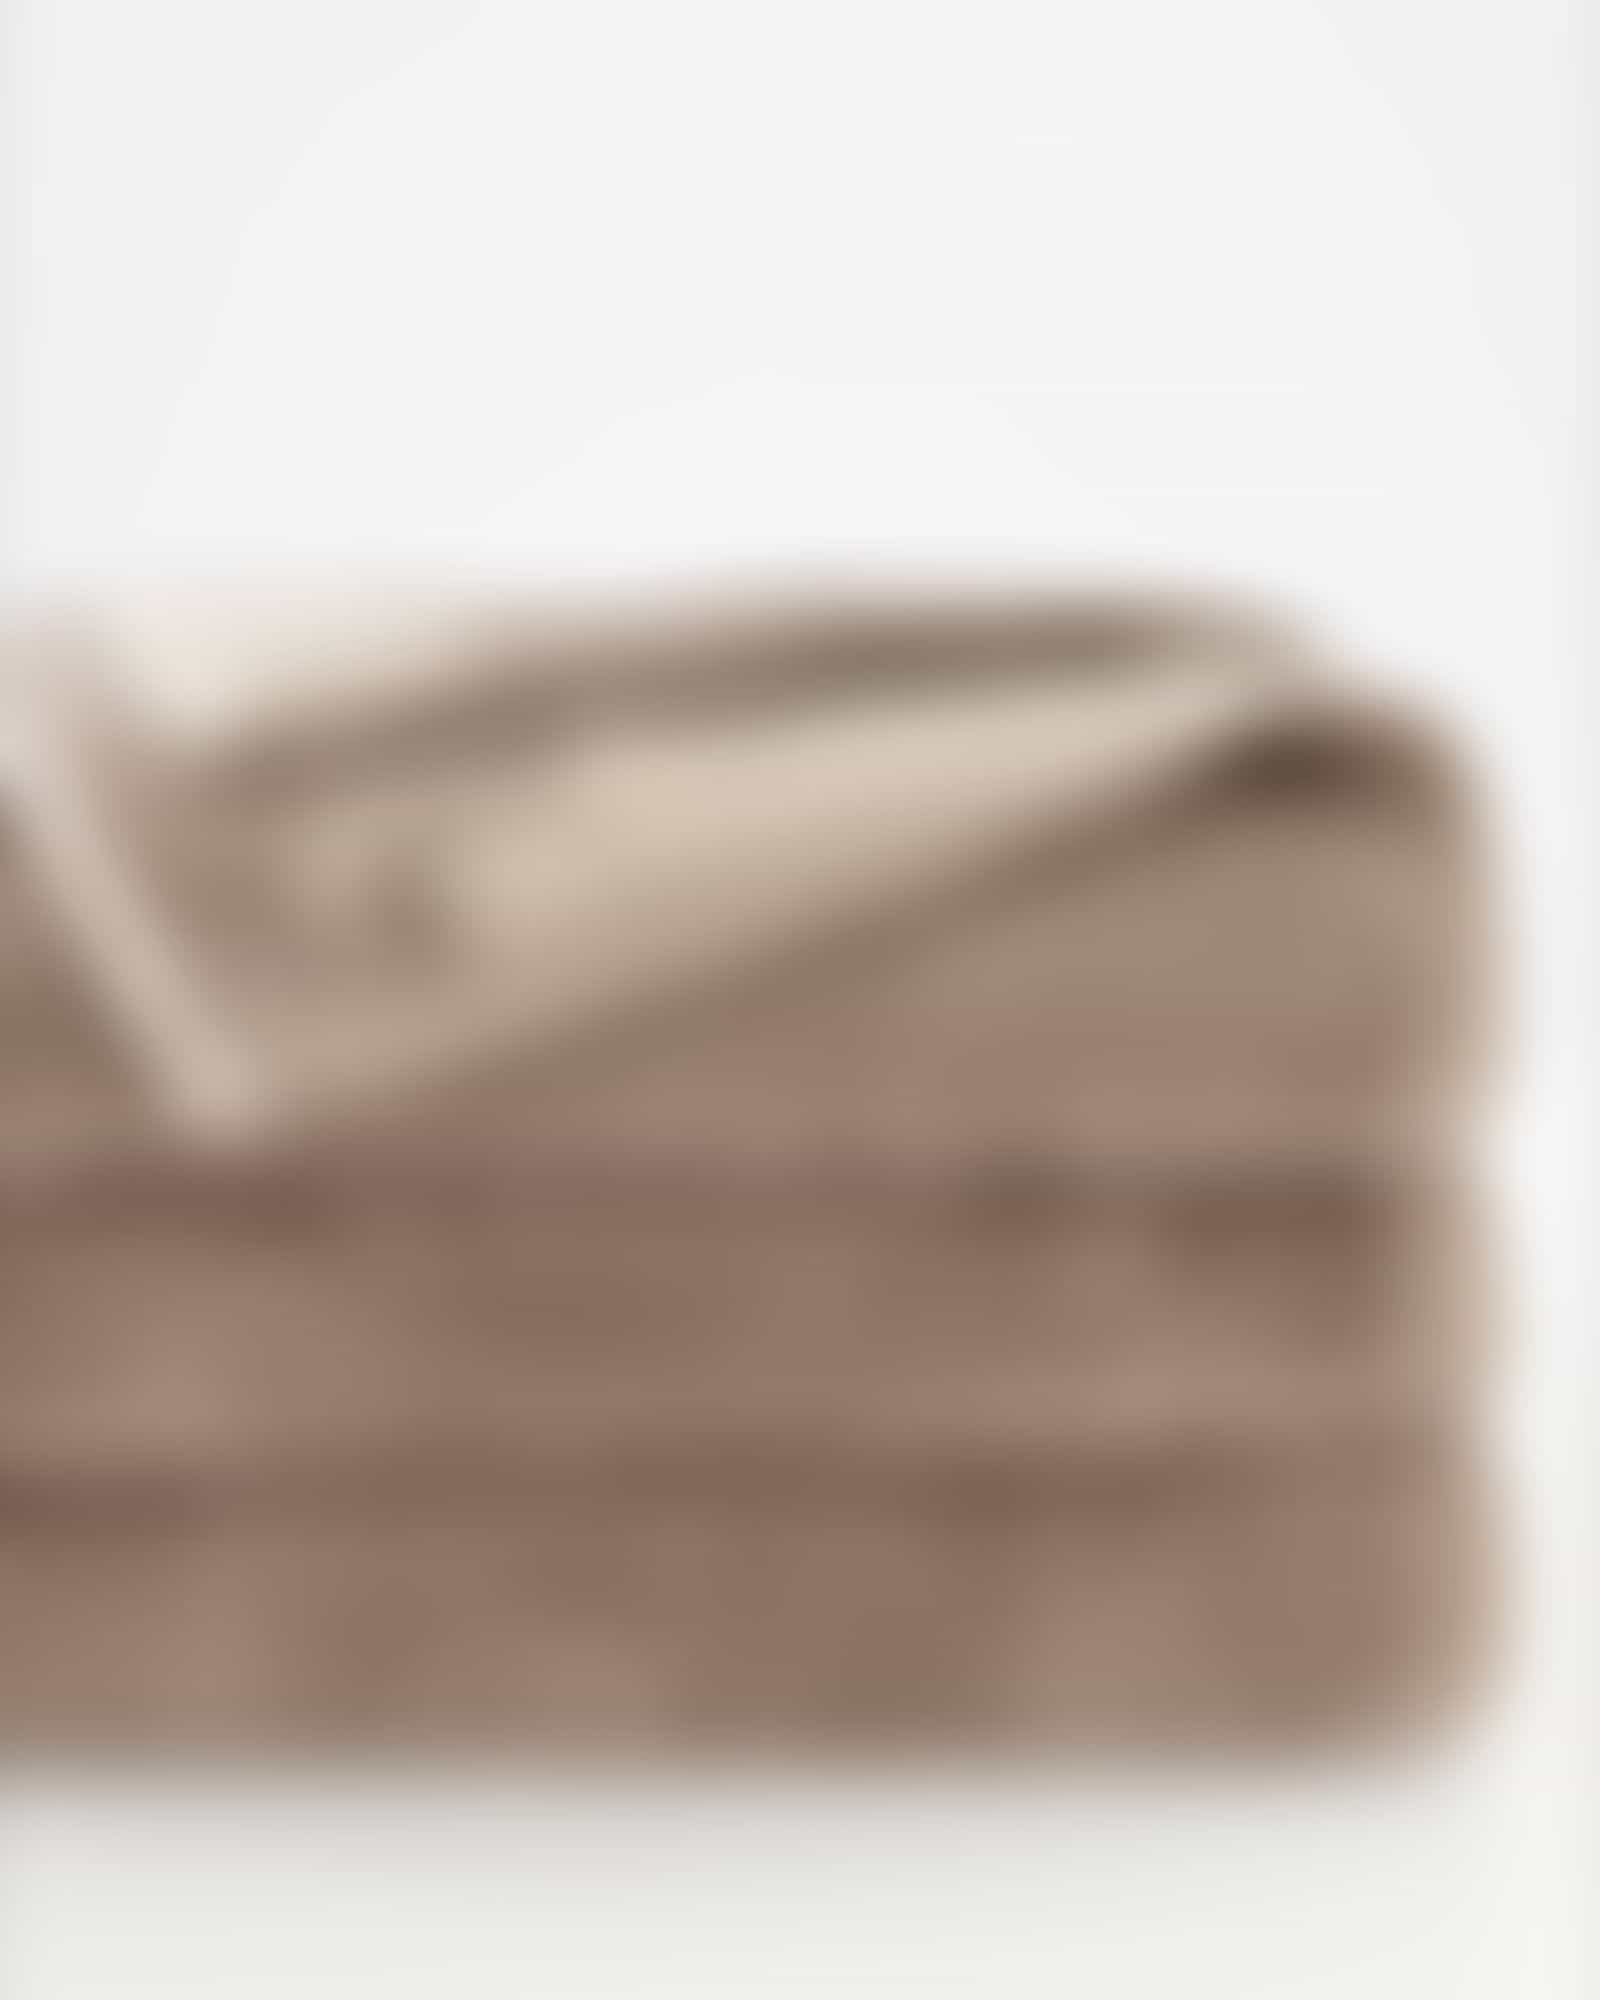 JOOP Tone Doubleface 1689 - Farbe: Sand - 37 - Waschhandschuh 16x22 cm Detailbild 2